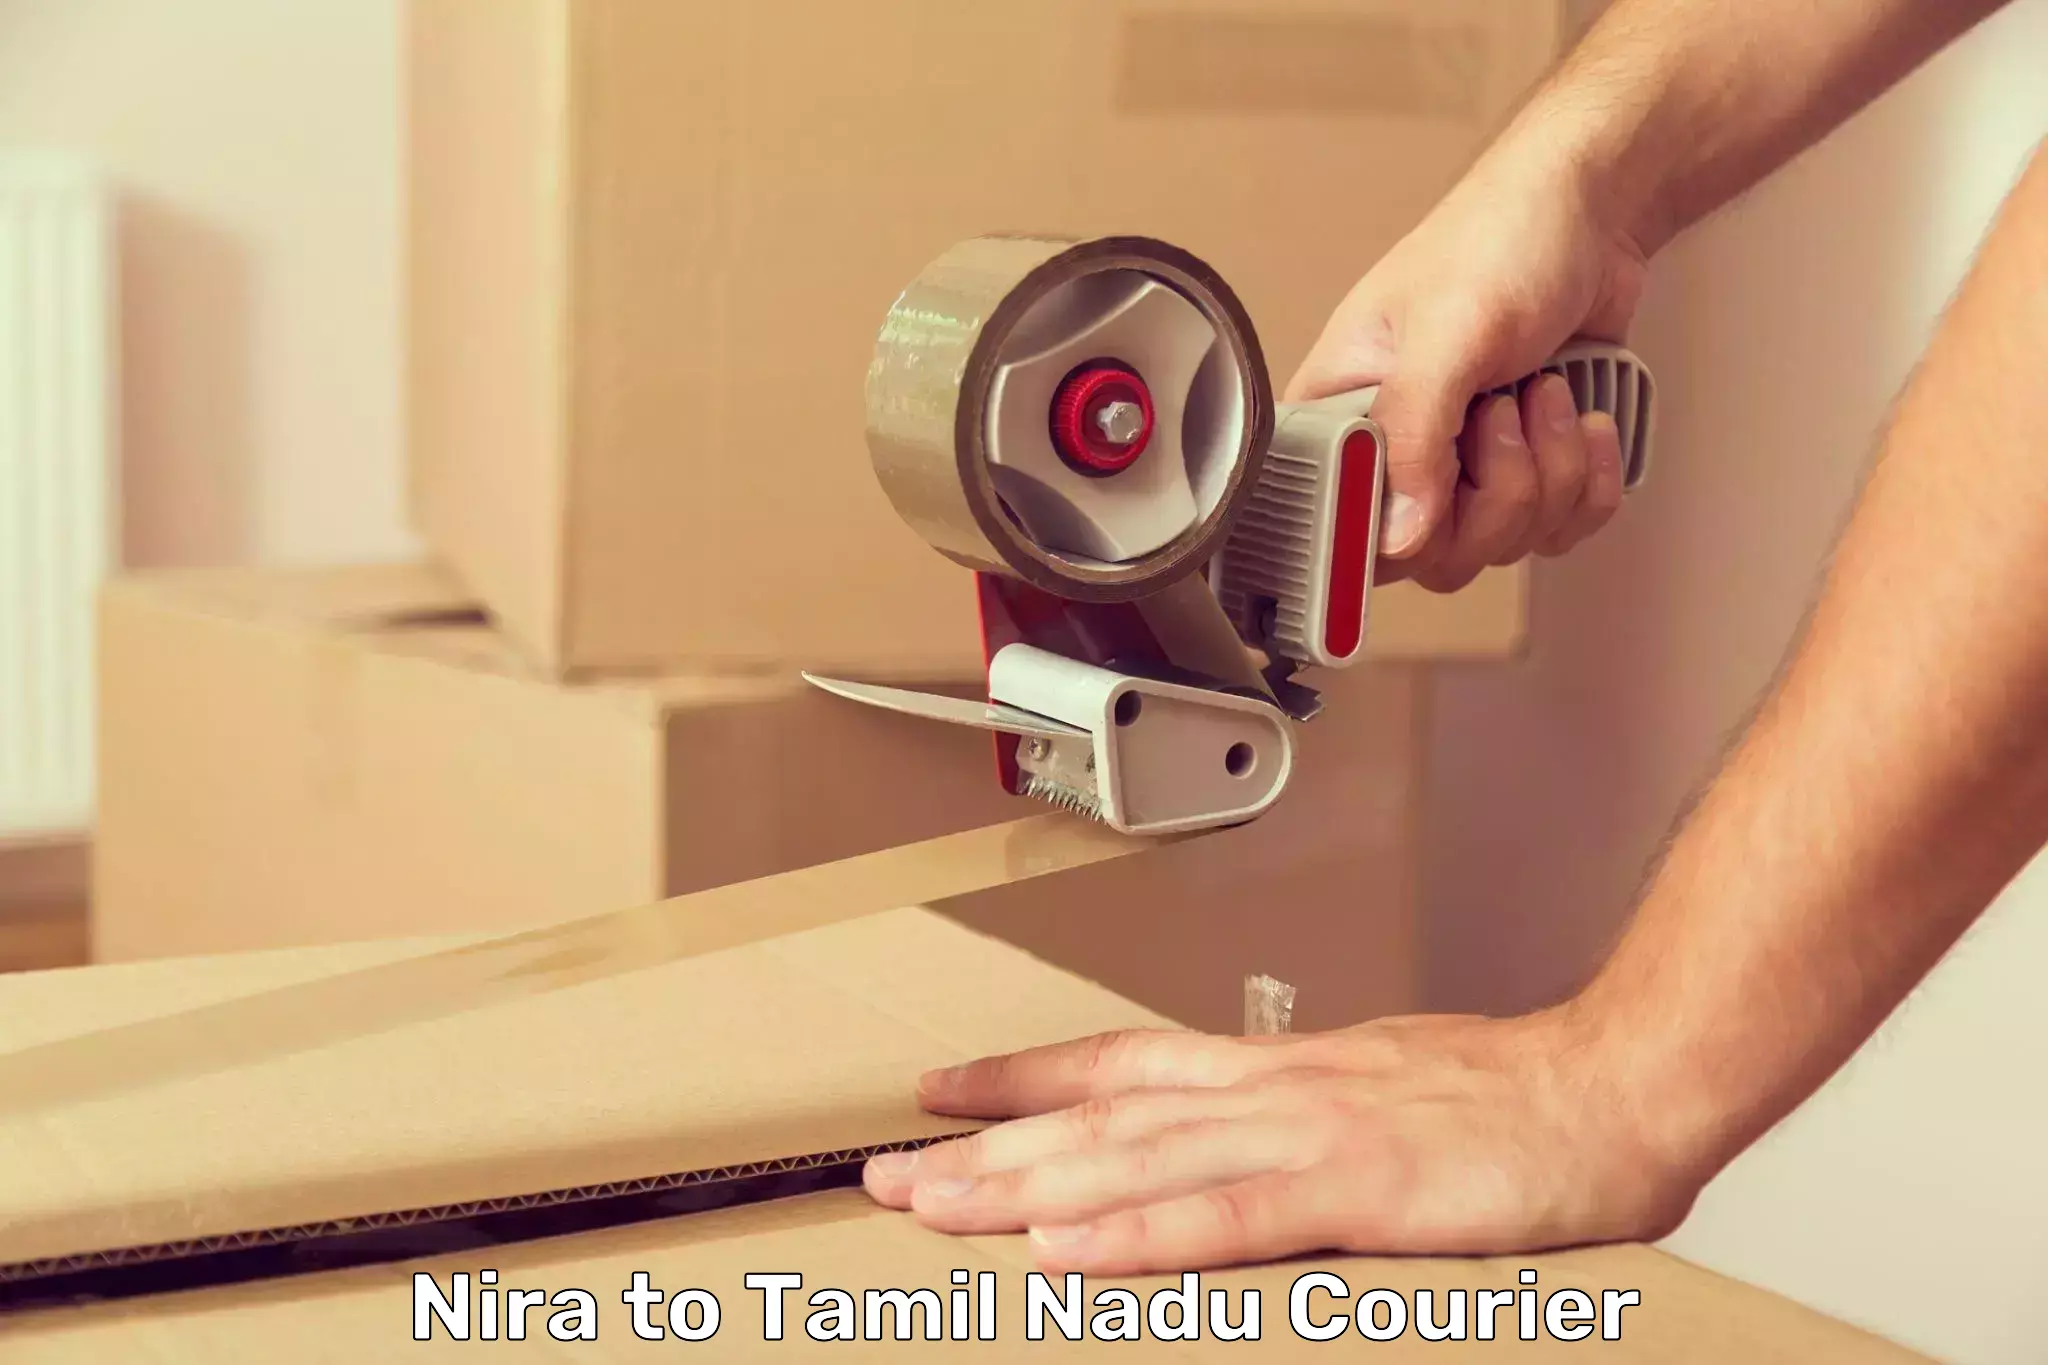 Local delivery service Nira to Tamil Nadu